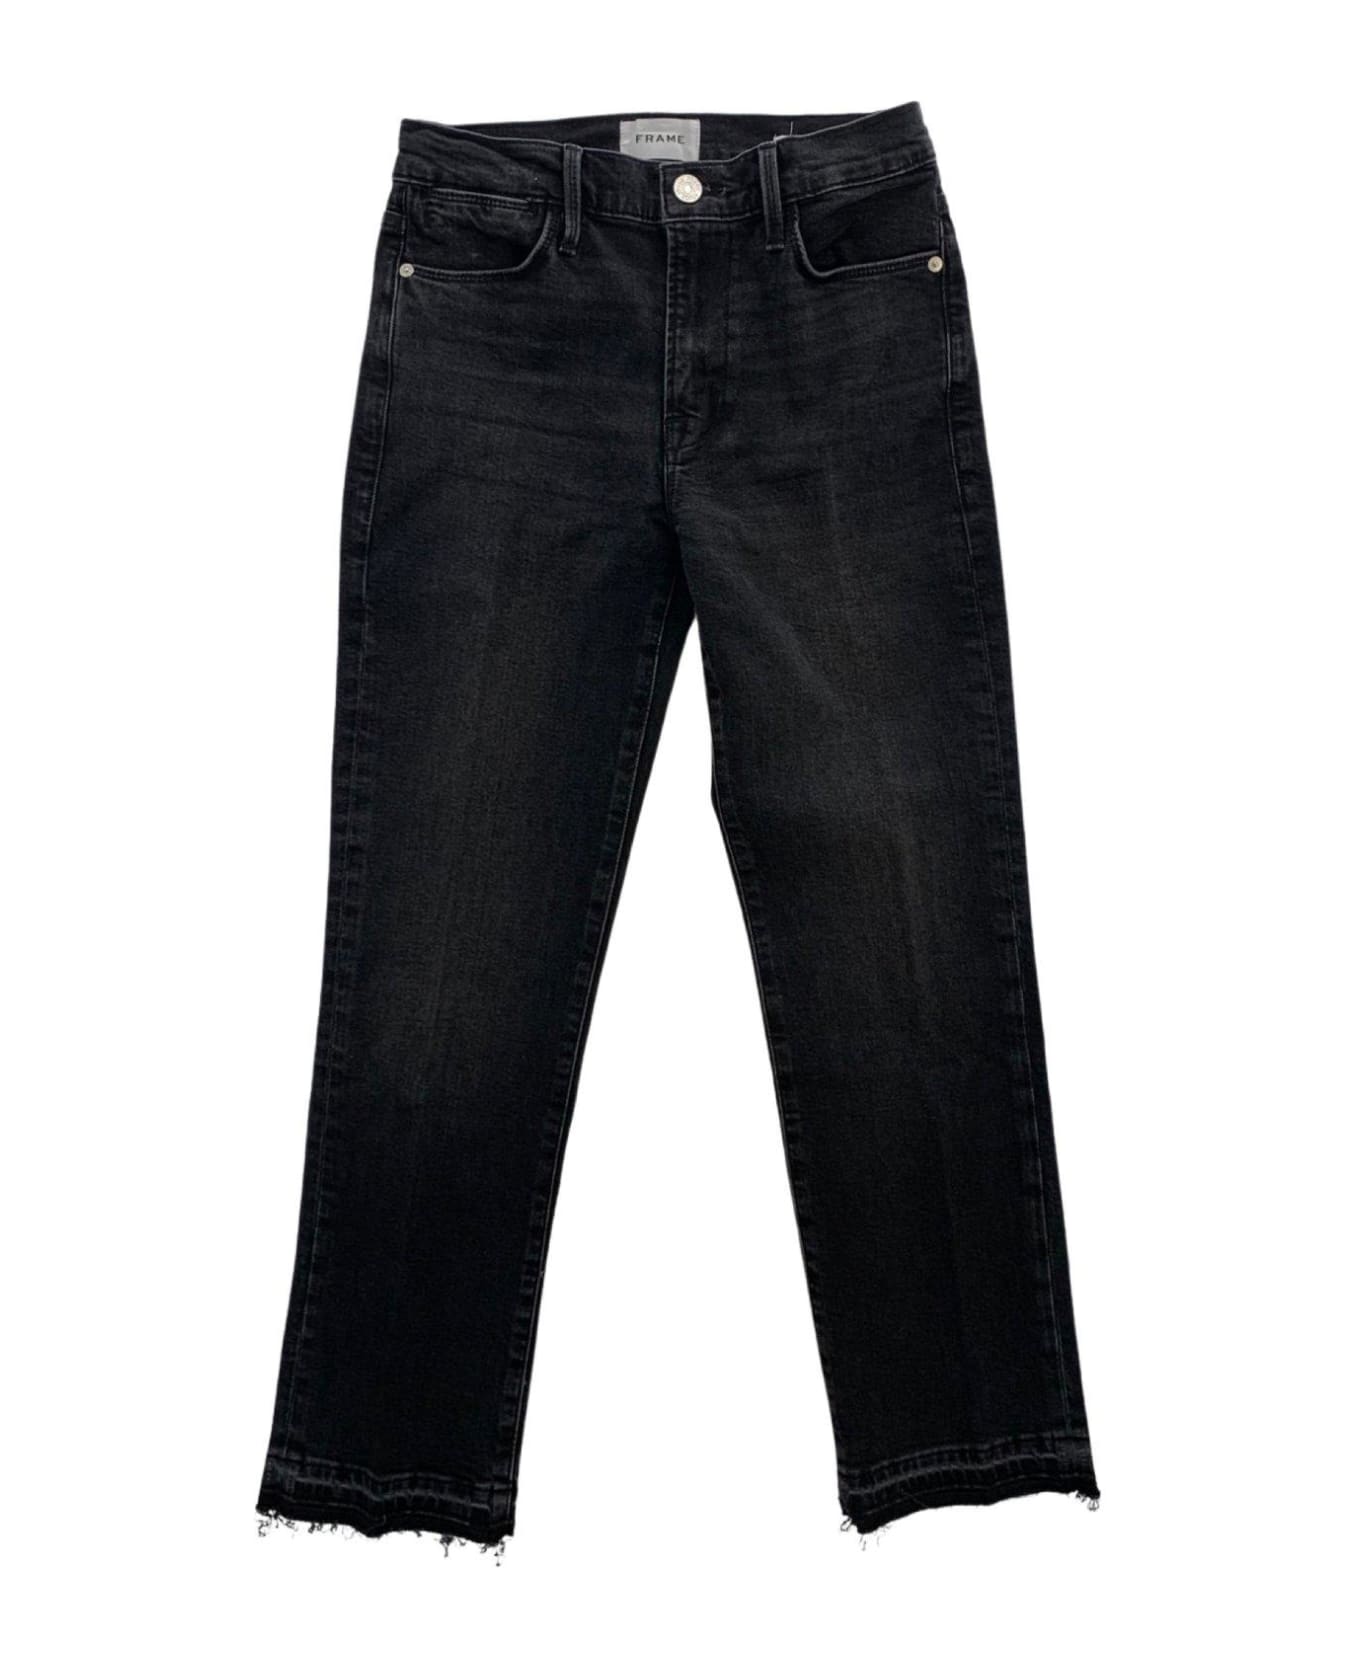 Frame Raw Hem Cropped Jeans - Black